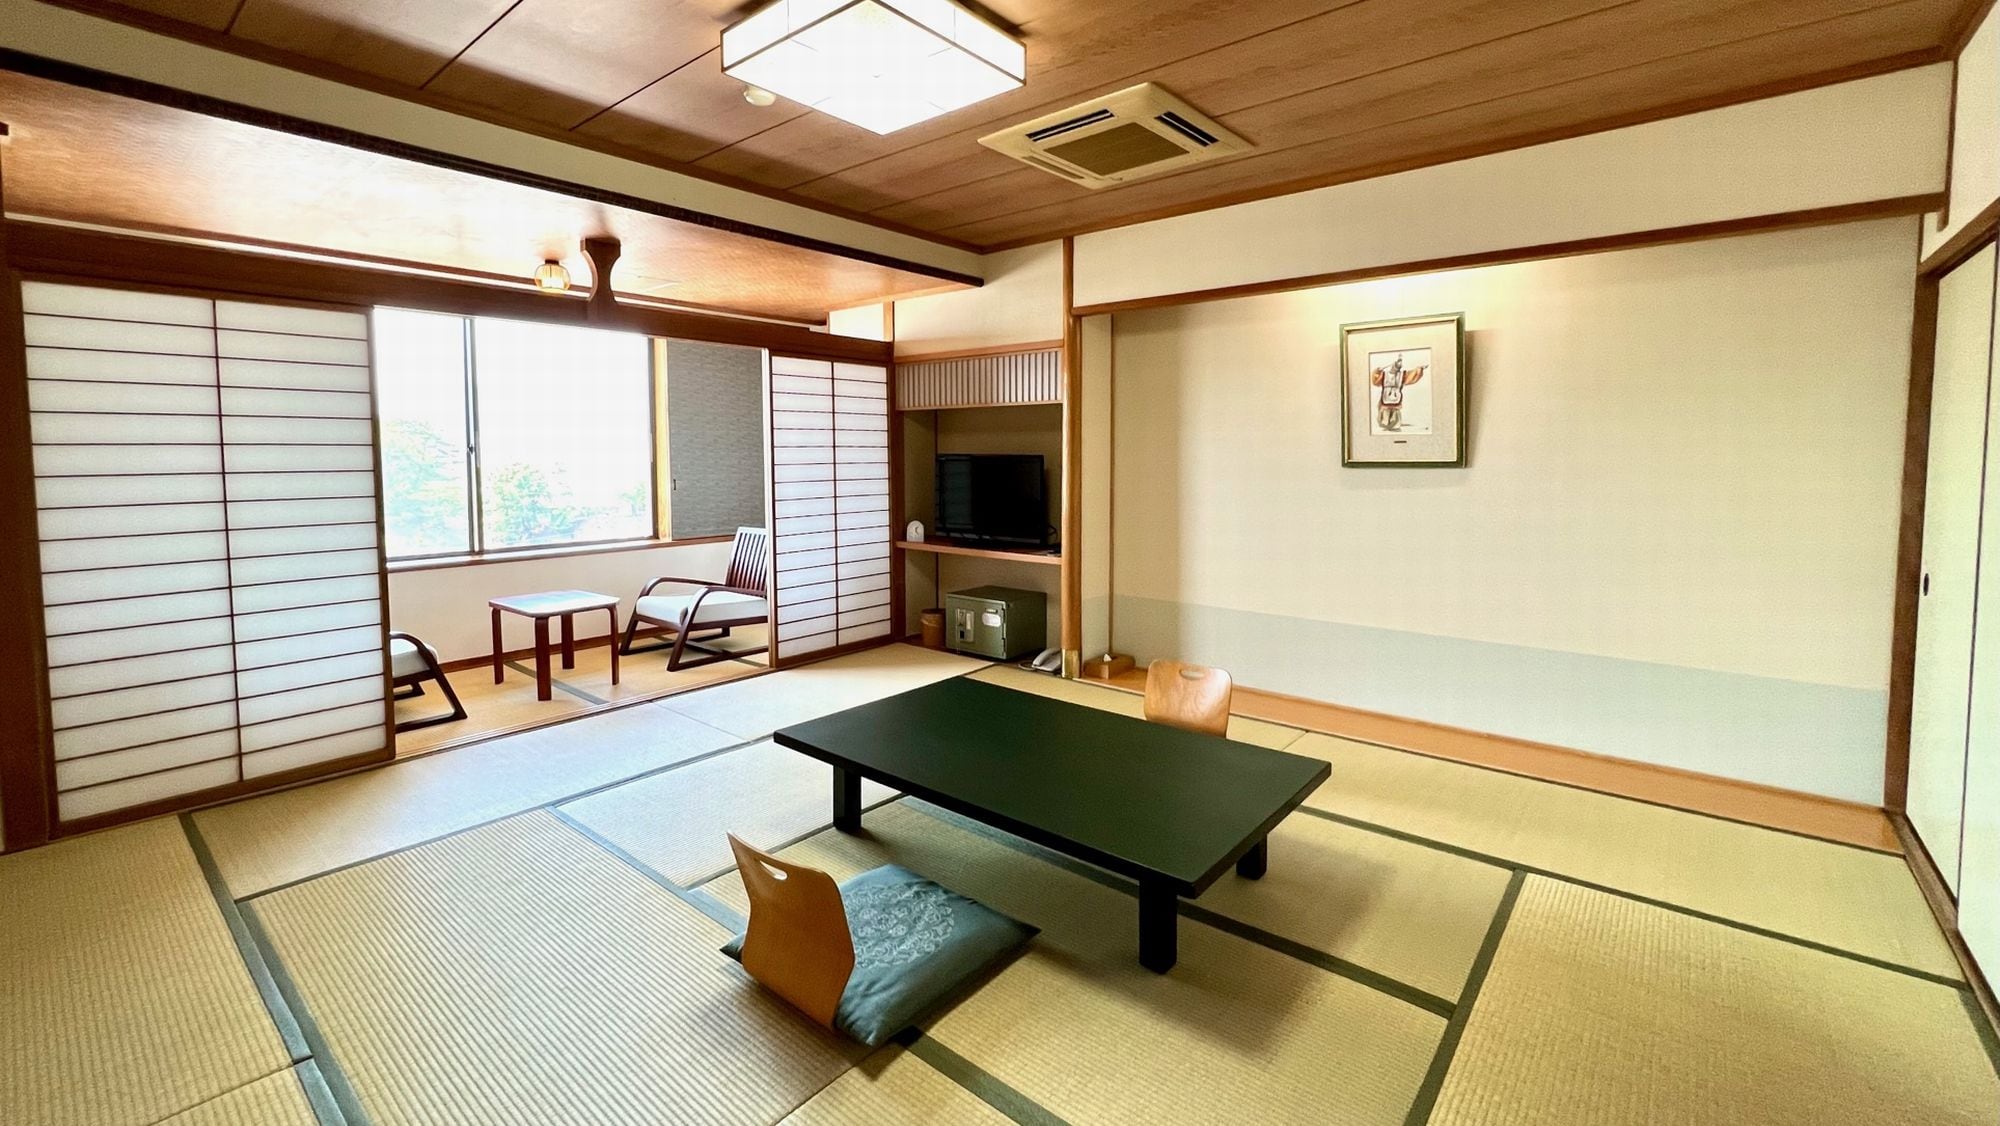 Japanese-style room 12.5 tatami mats 6 people capacity Japanese-style room